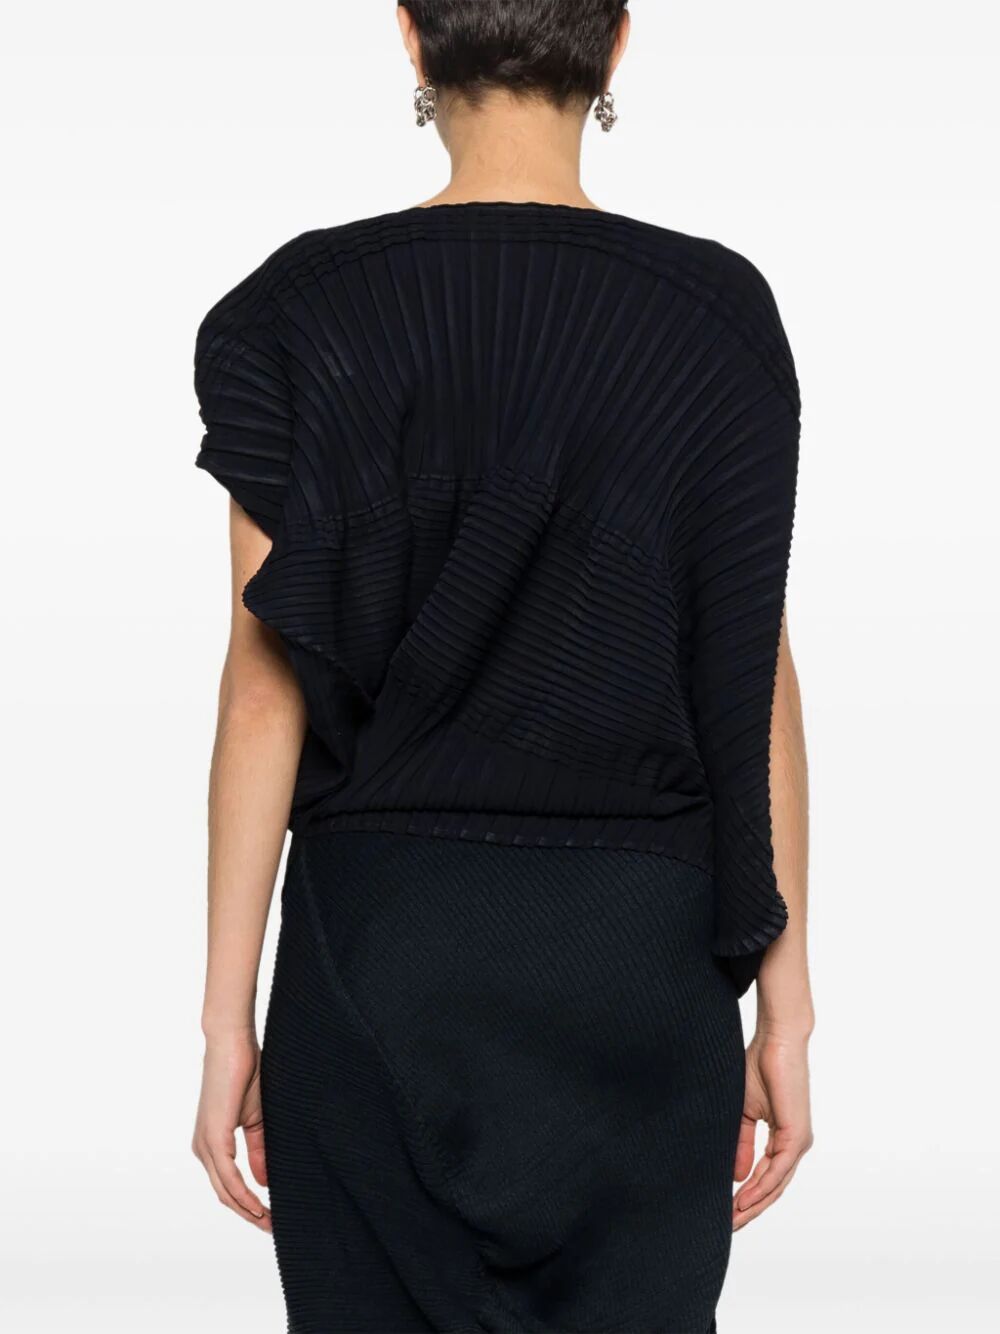 Aerate Pleats Sweater